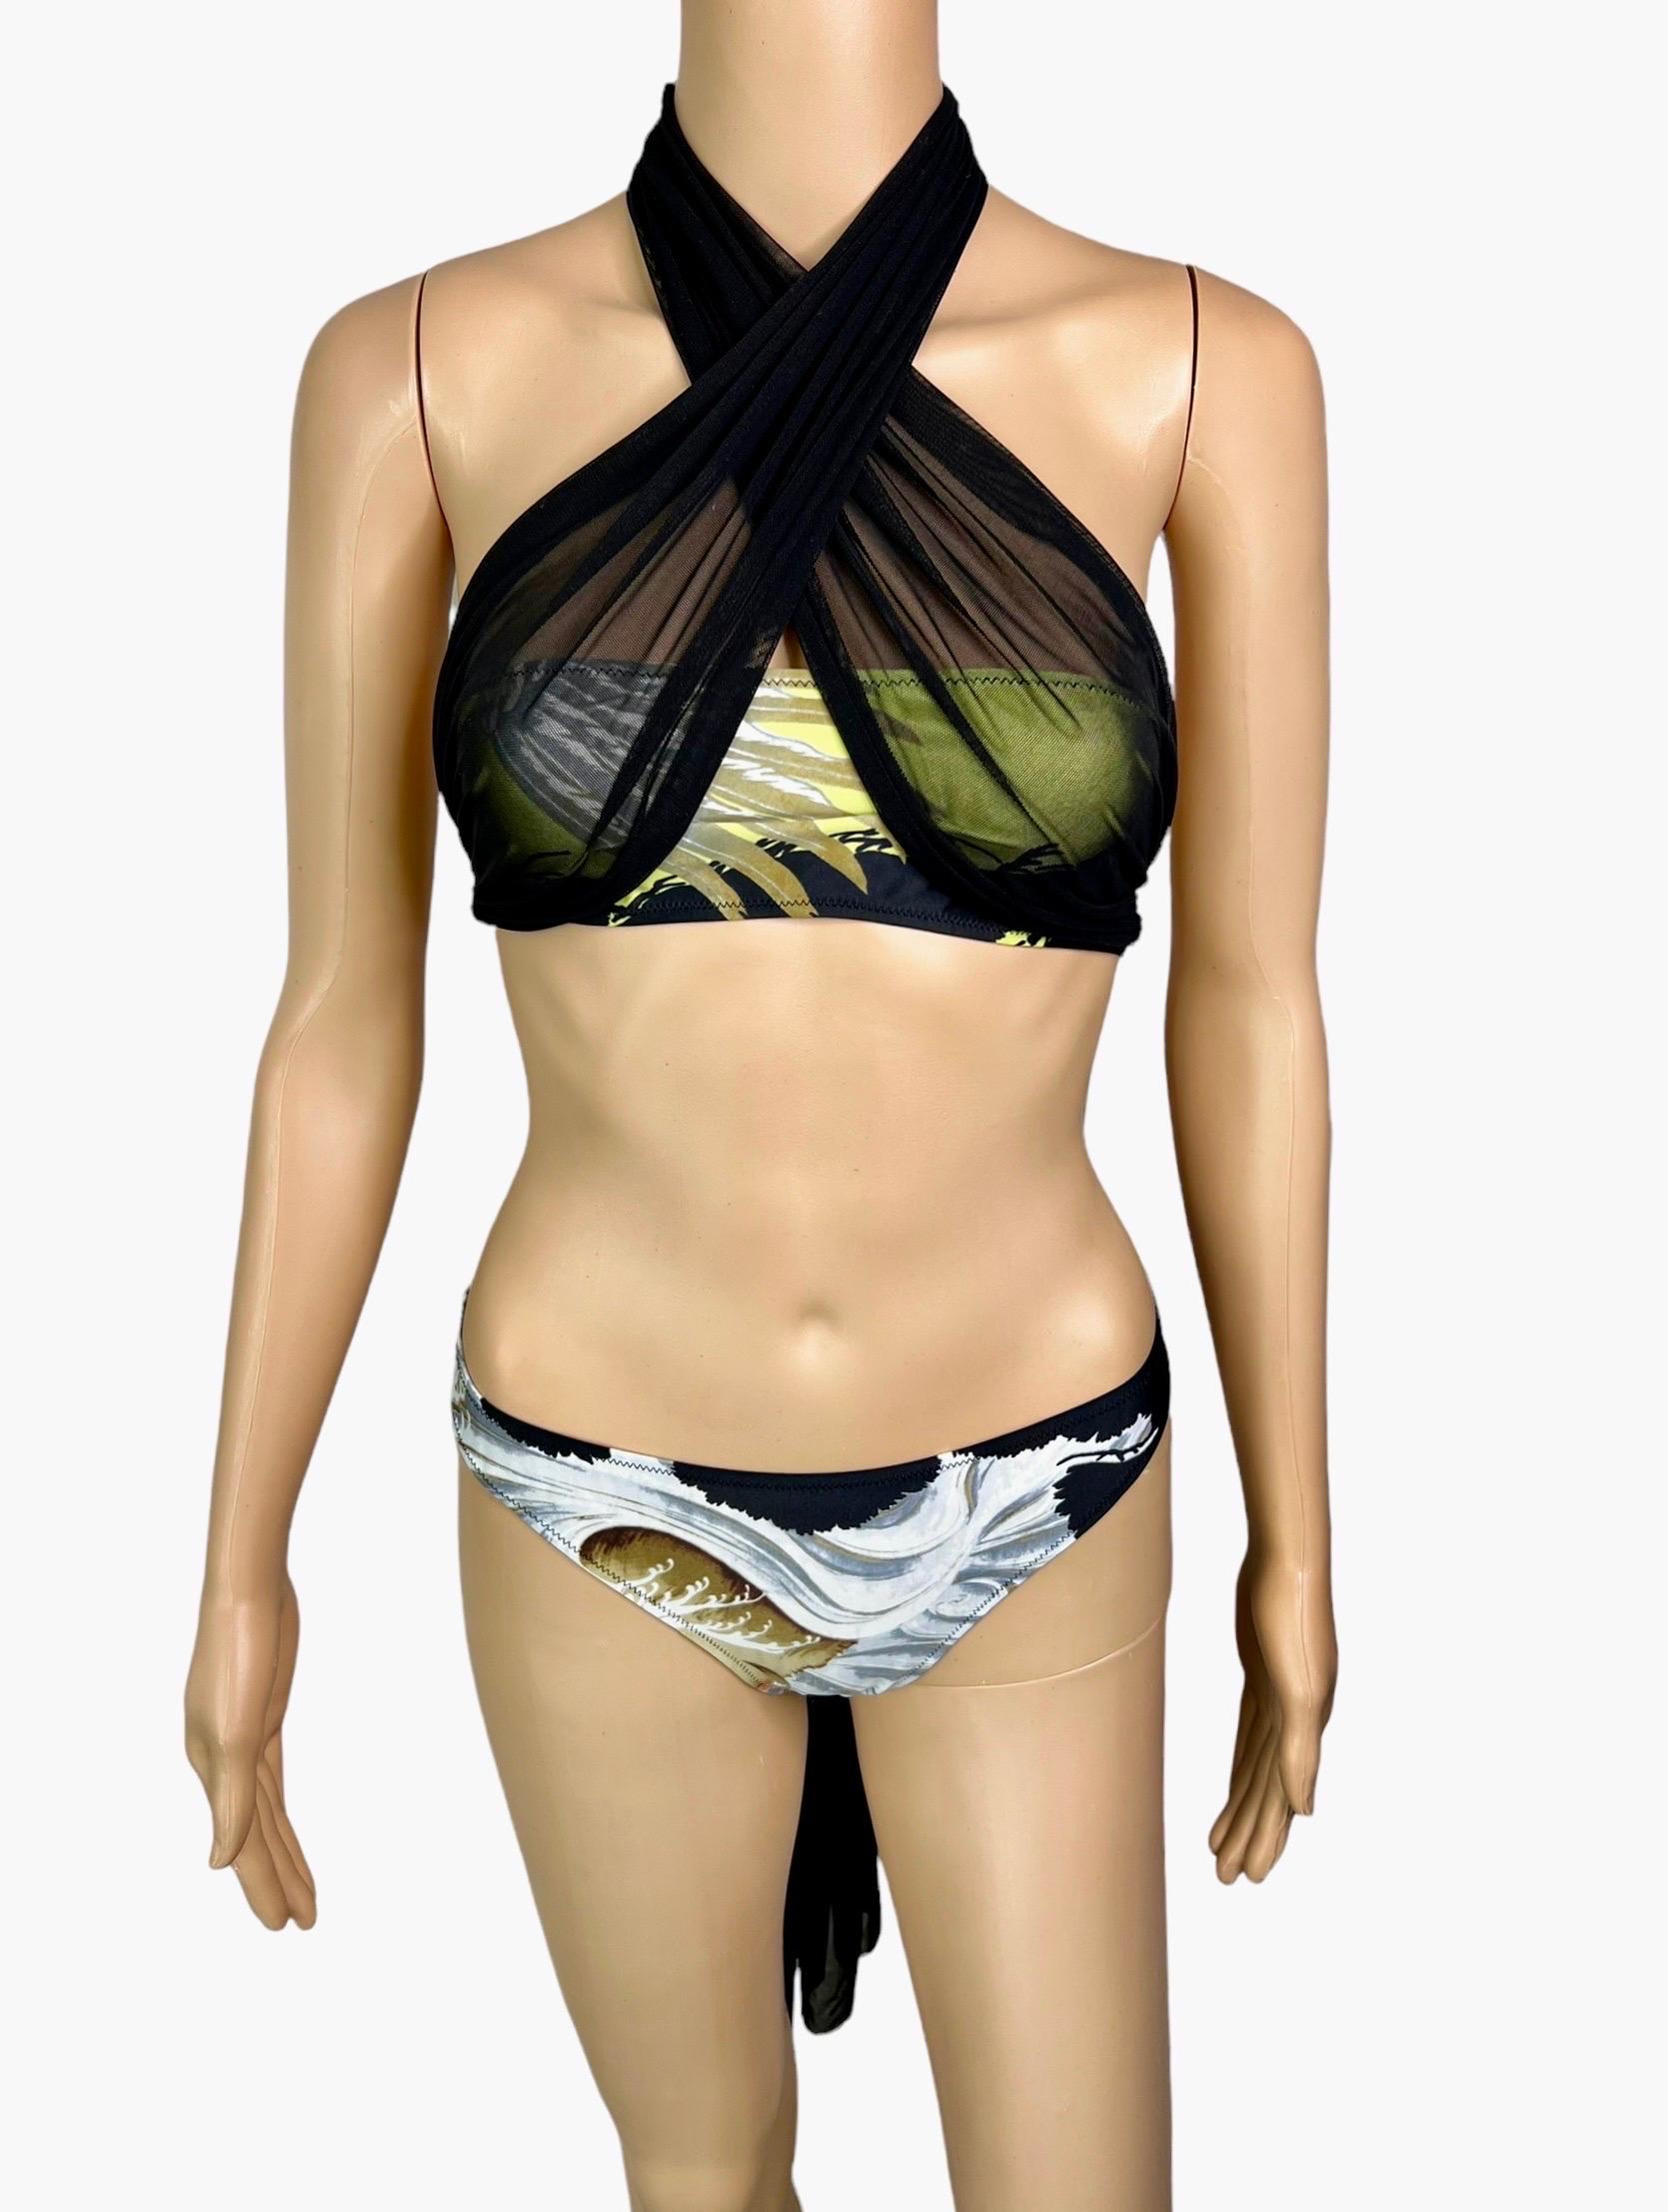 Jean Paul Gaultier Soleil Eagle Tattoo Bikini Swimwear Swimsuit 2 Piece Set In Excellent Condition For Sale In Naples, FL